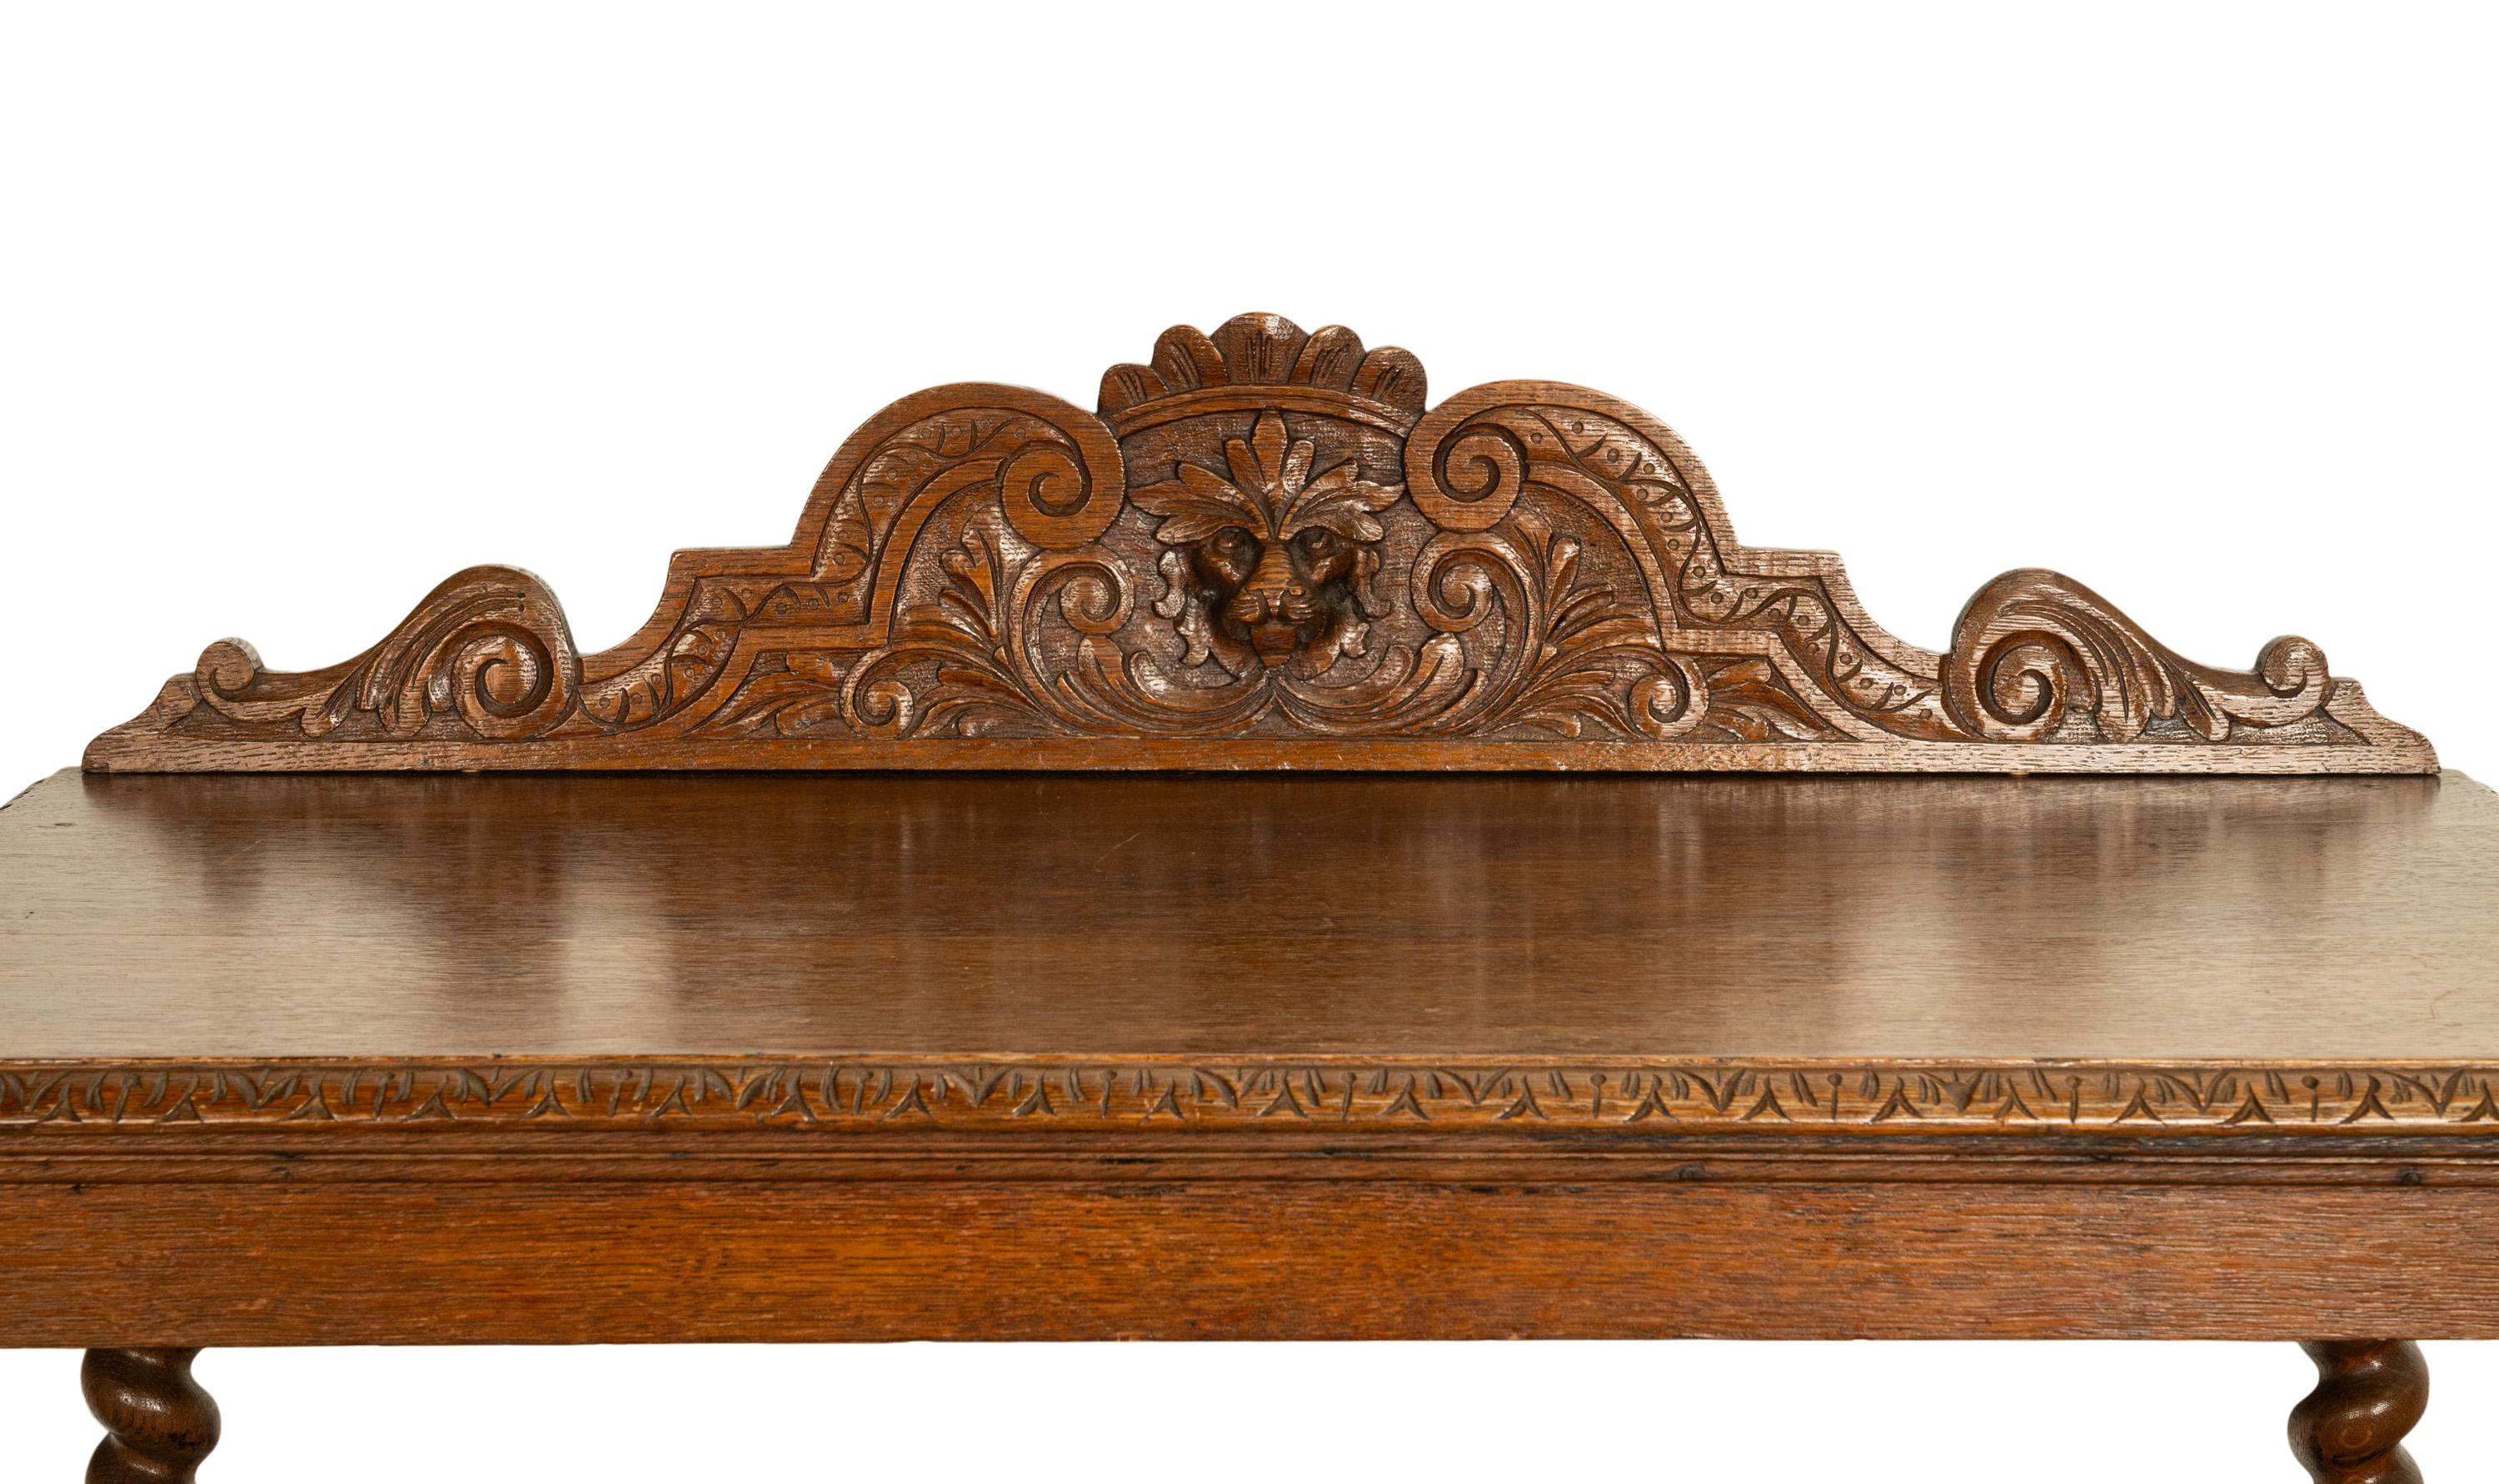 Antique French Renaissance Revival Carved Oak Barley Twist Server Buffet 1870 For Sale 12